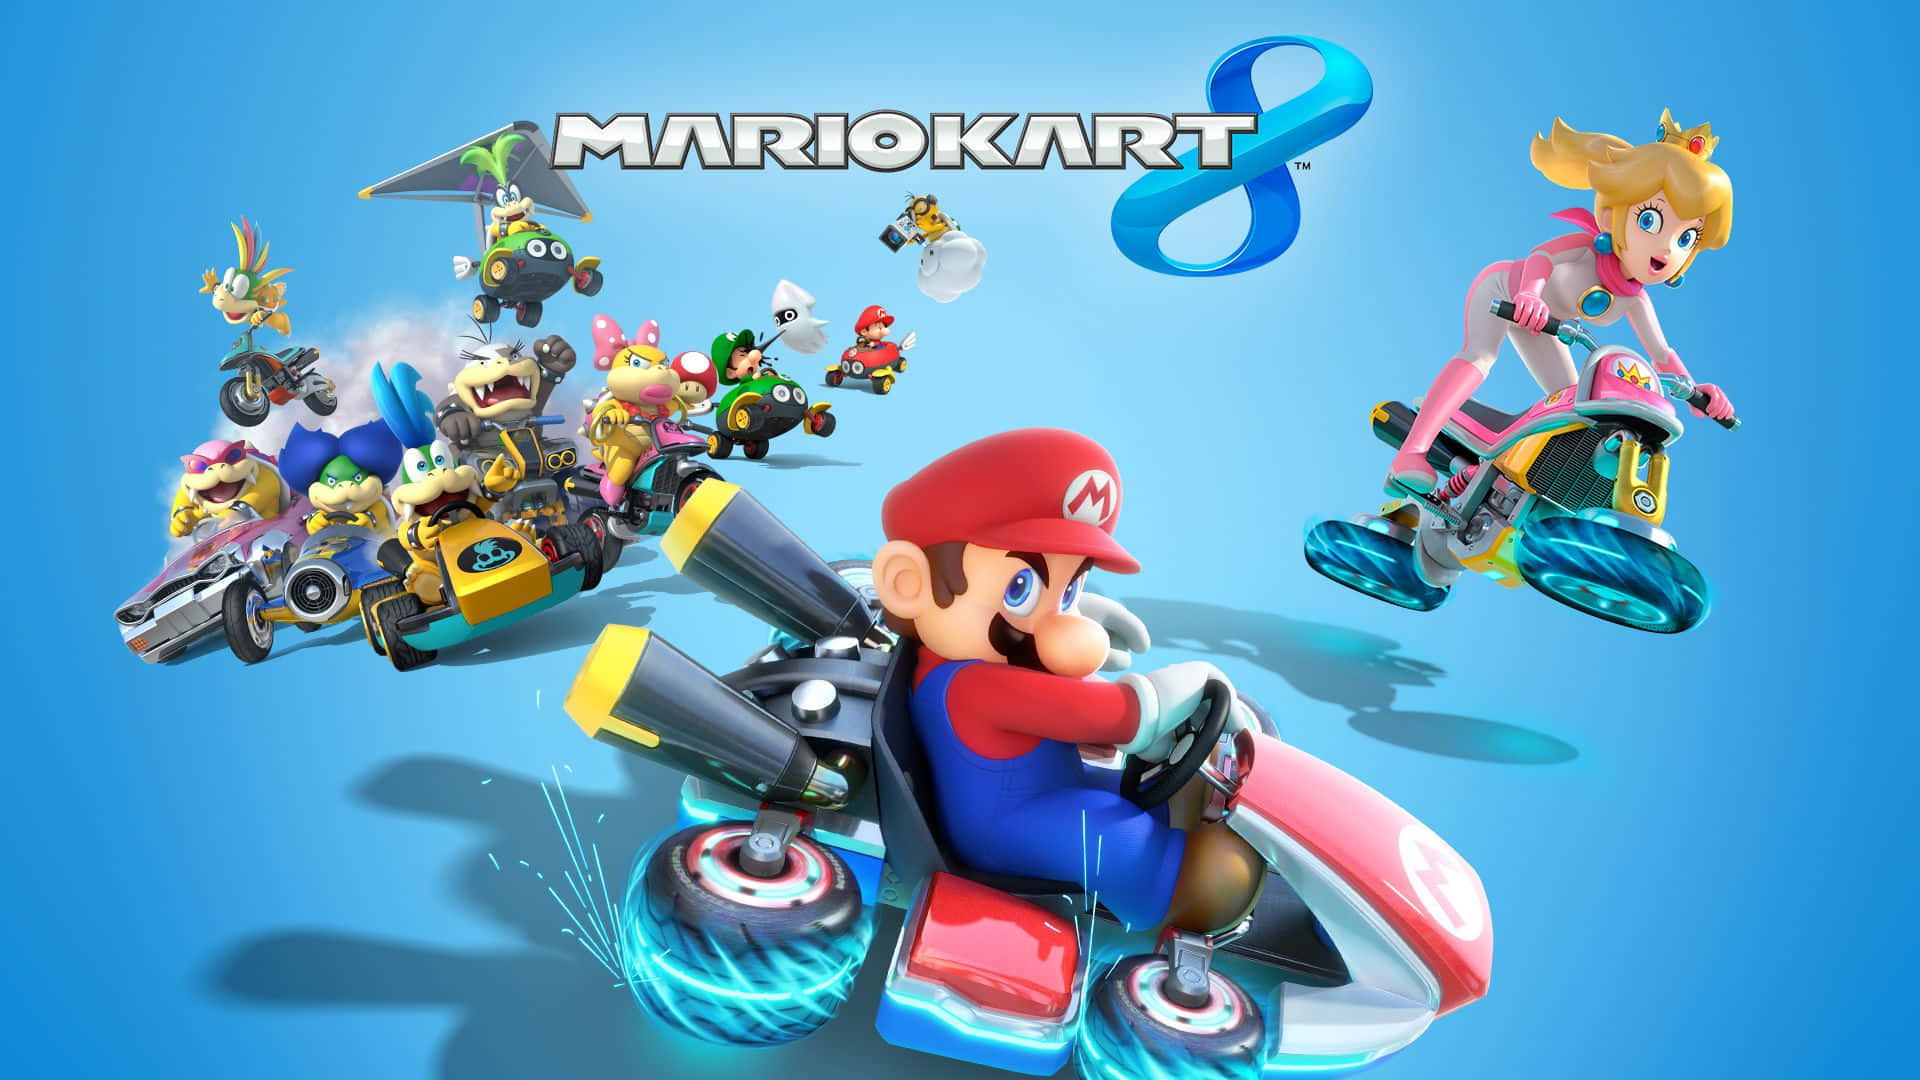 Turn Up the Fun With Mario Kart